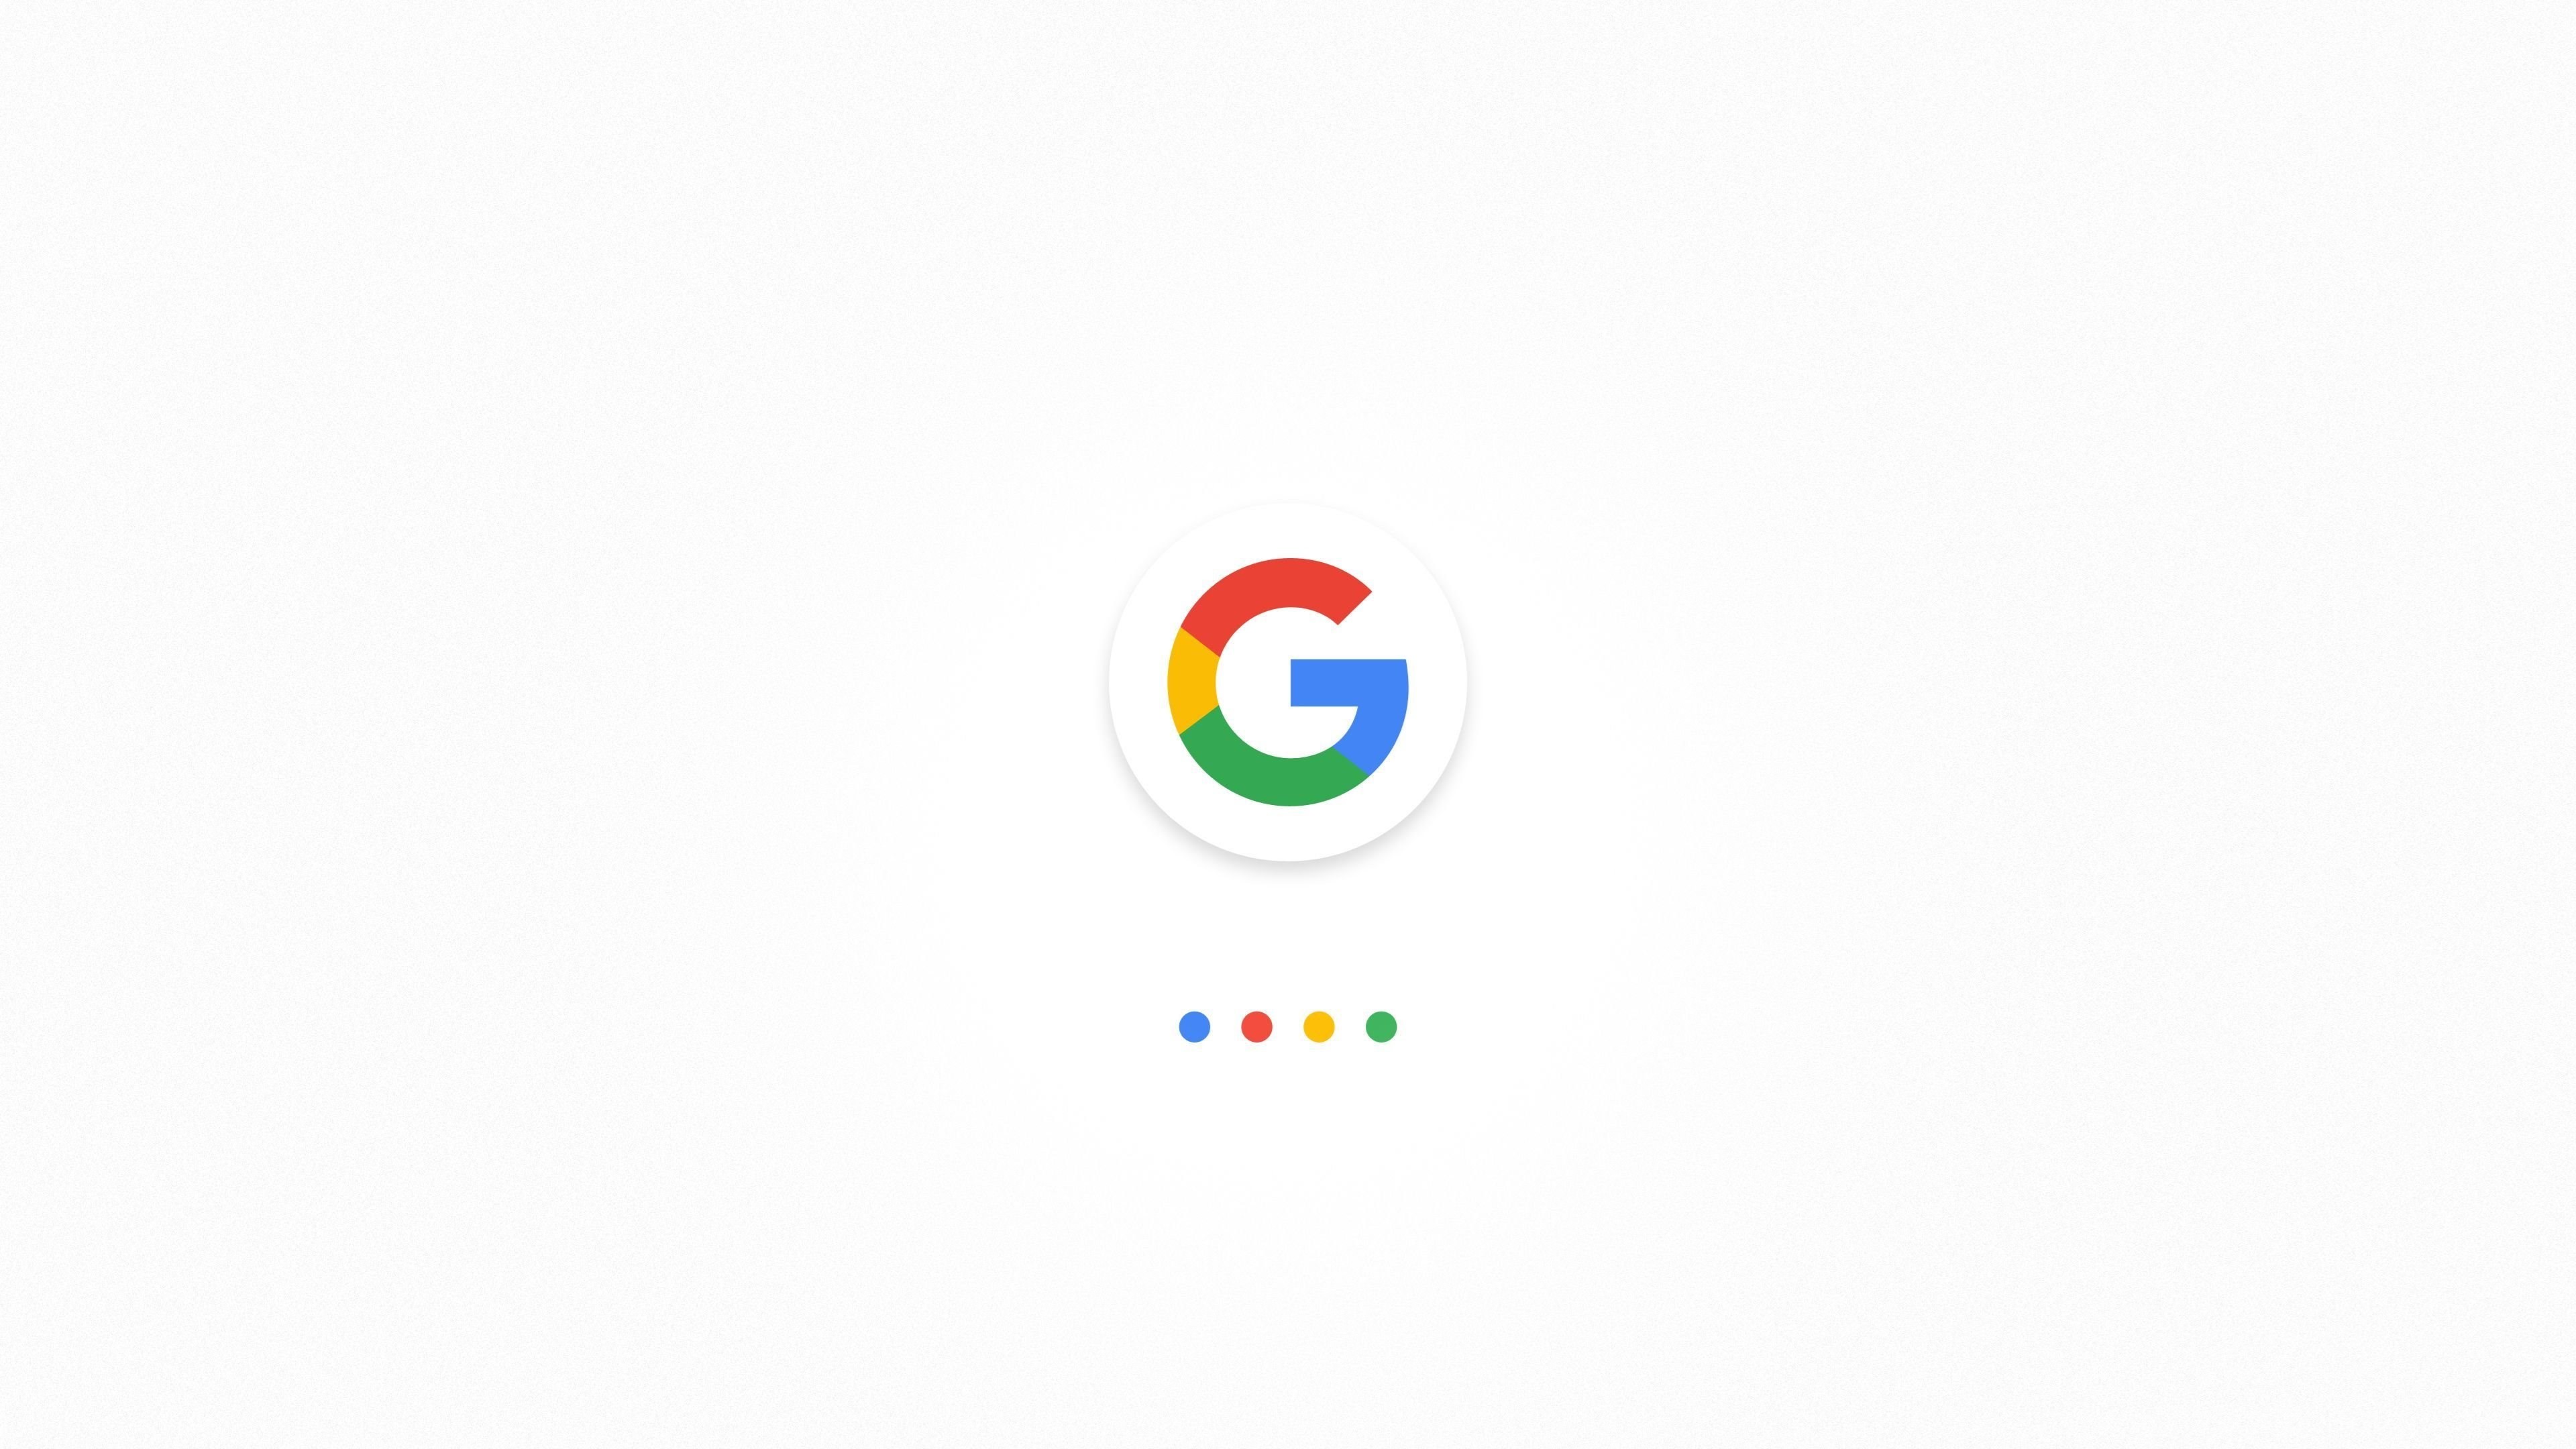 3840x2160 4K Google G Minimalistic Wallpapers By JovicaSmileski On DeviantArt